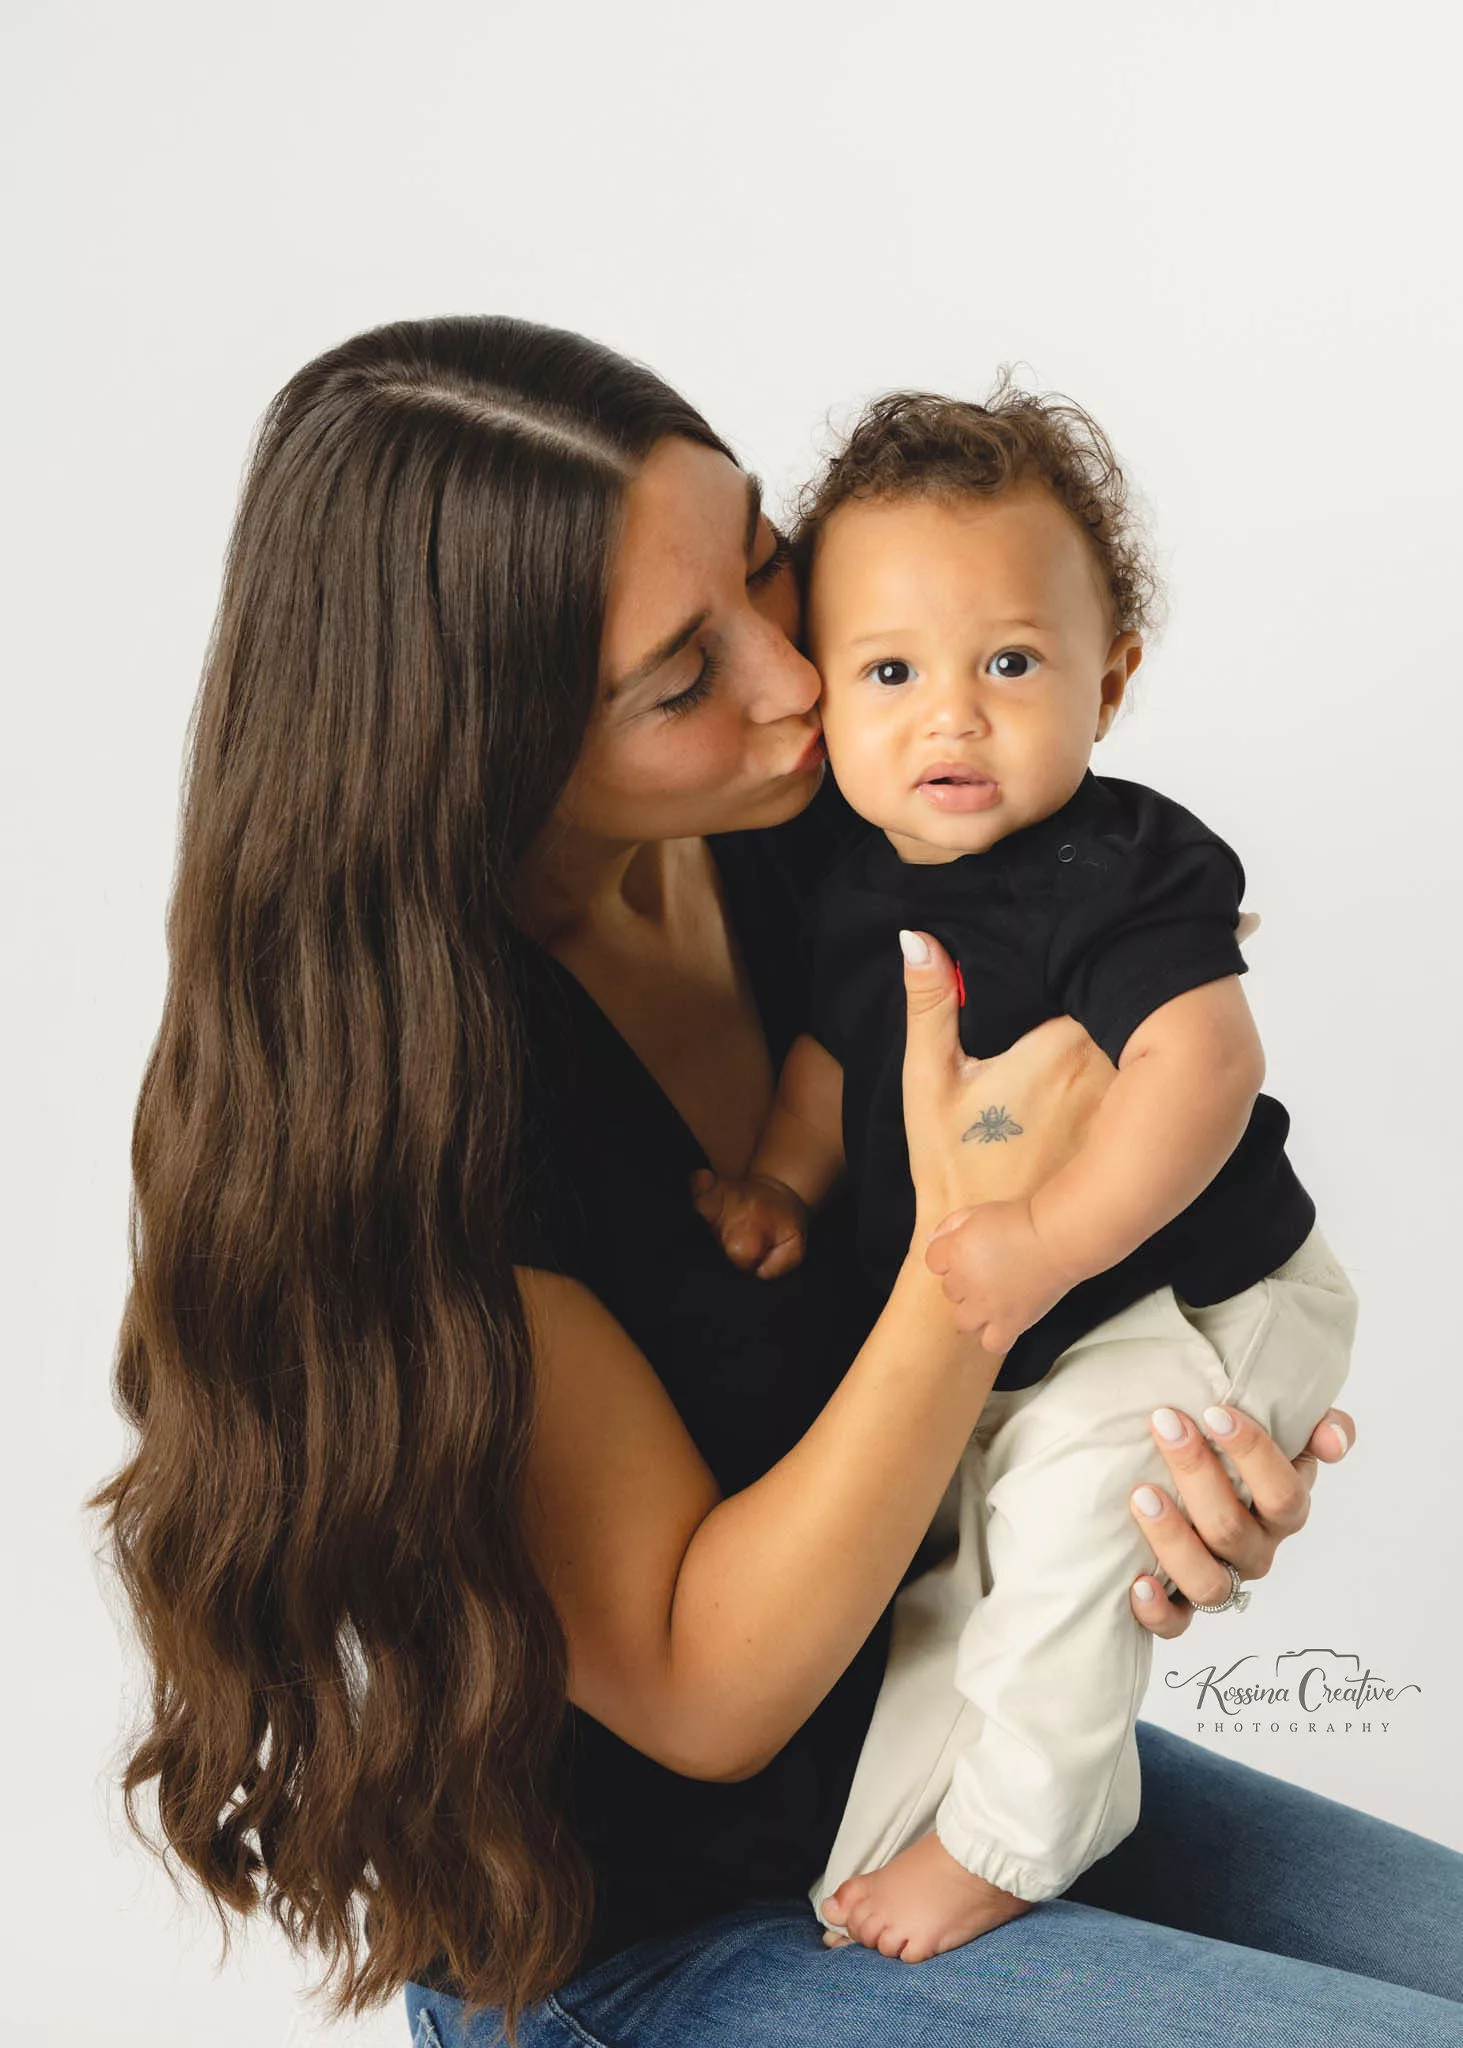 orlando photo studio family photographer studio portraits generations mommy kissing baby